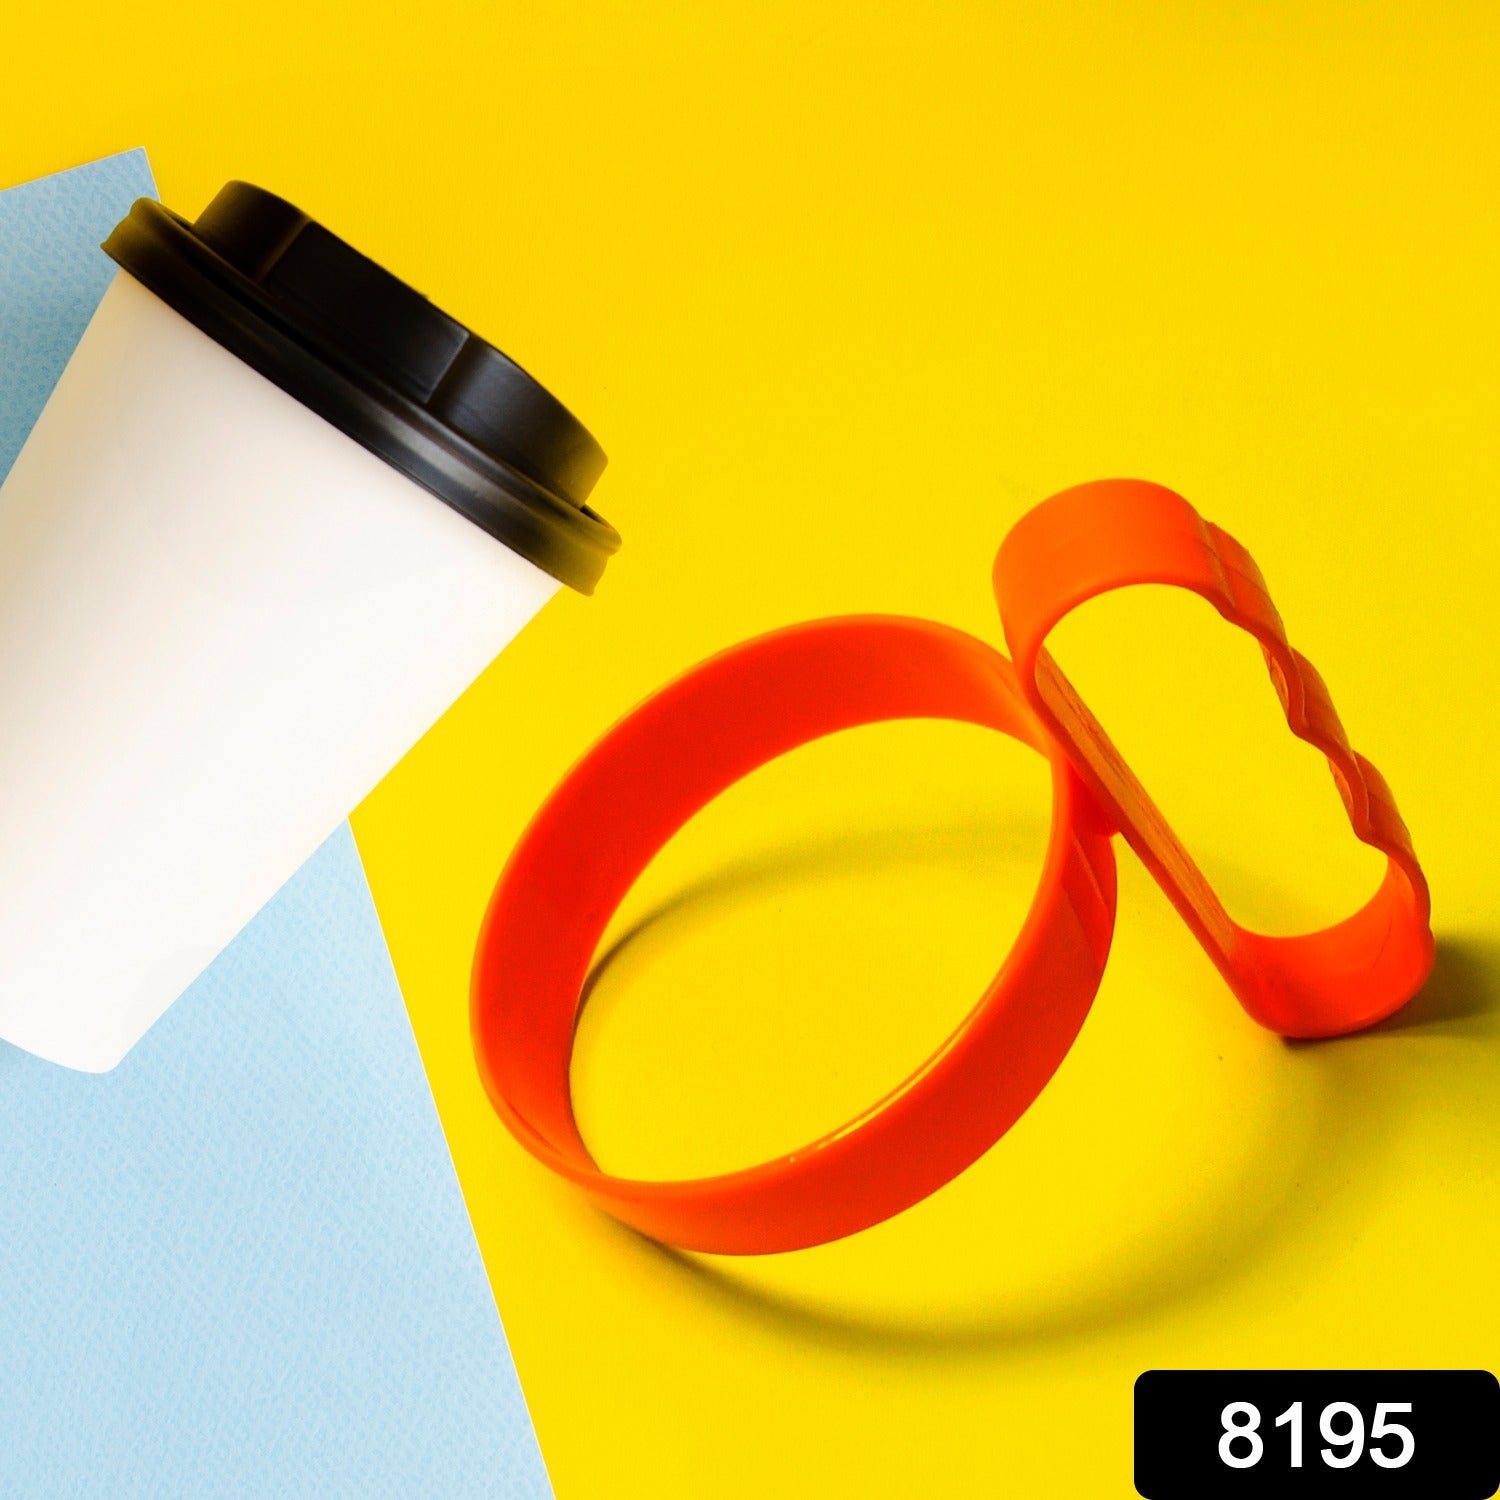 8195 Plastic Cup / Tumbler Handle Anti Slip Travel Mug Grip |  cupholder | Cup / Tumbler Accessories | Lightweight Tumbler Holder | Cup Handle (1 Pc)